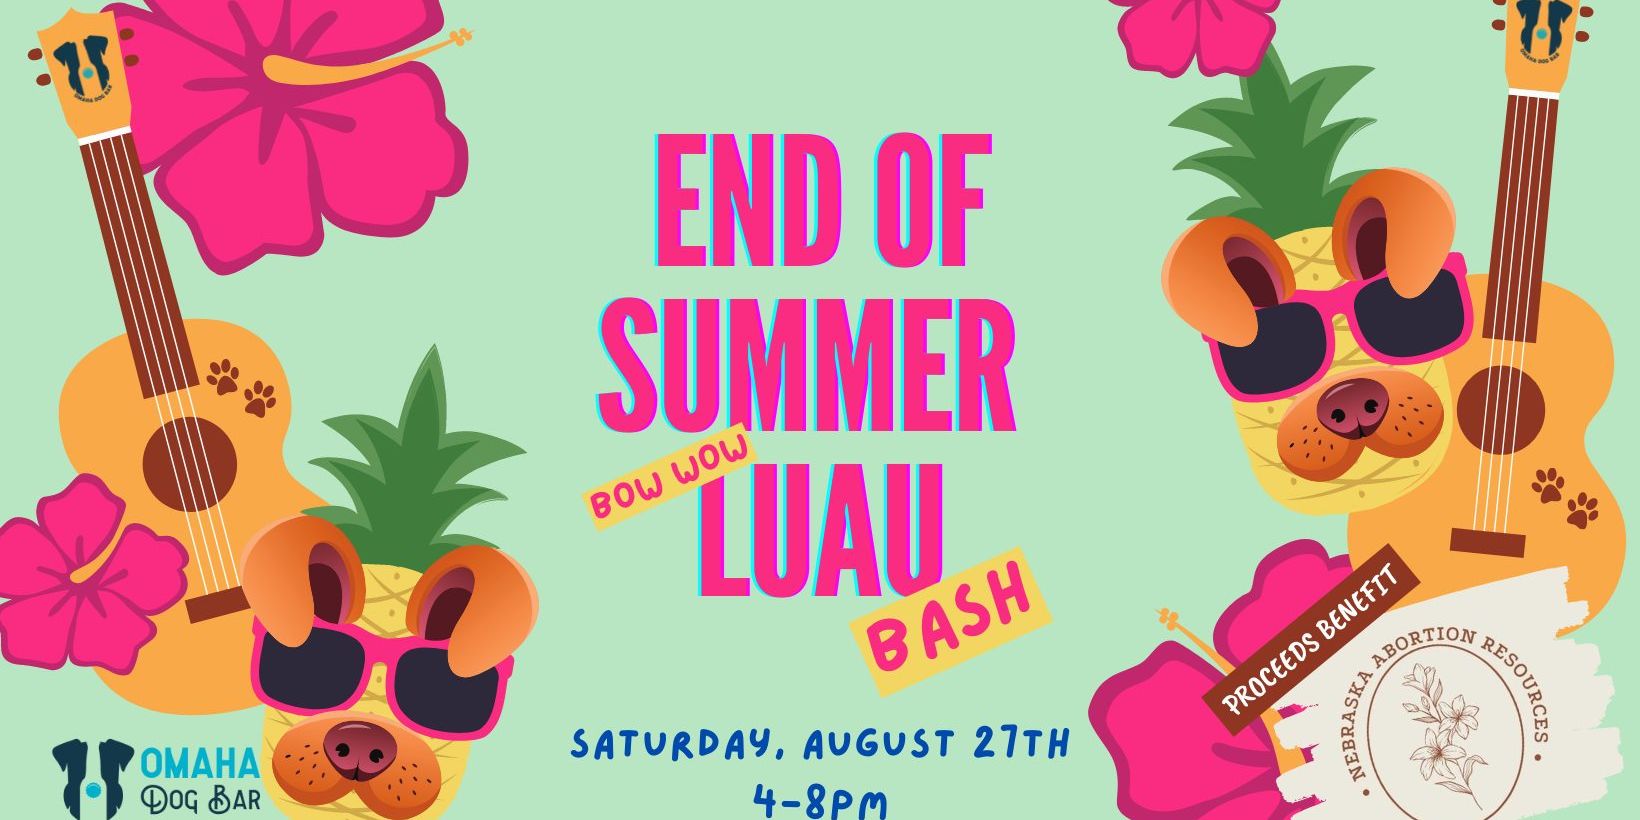 End of Summer Luau Bash promotional image